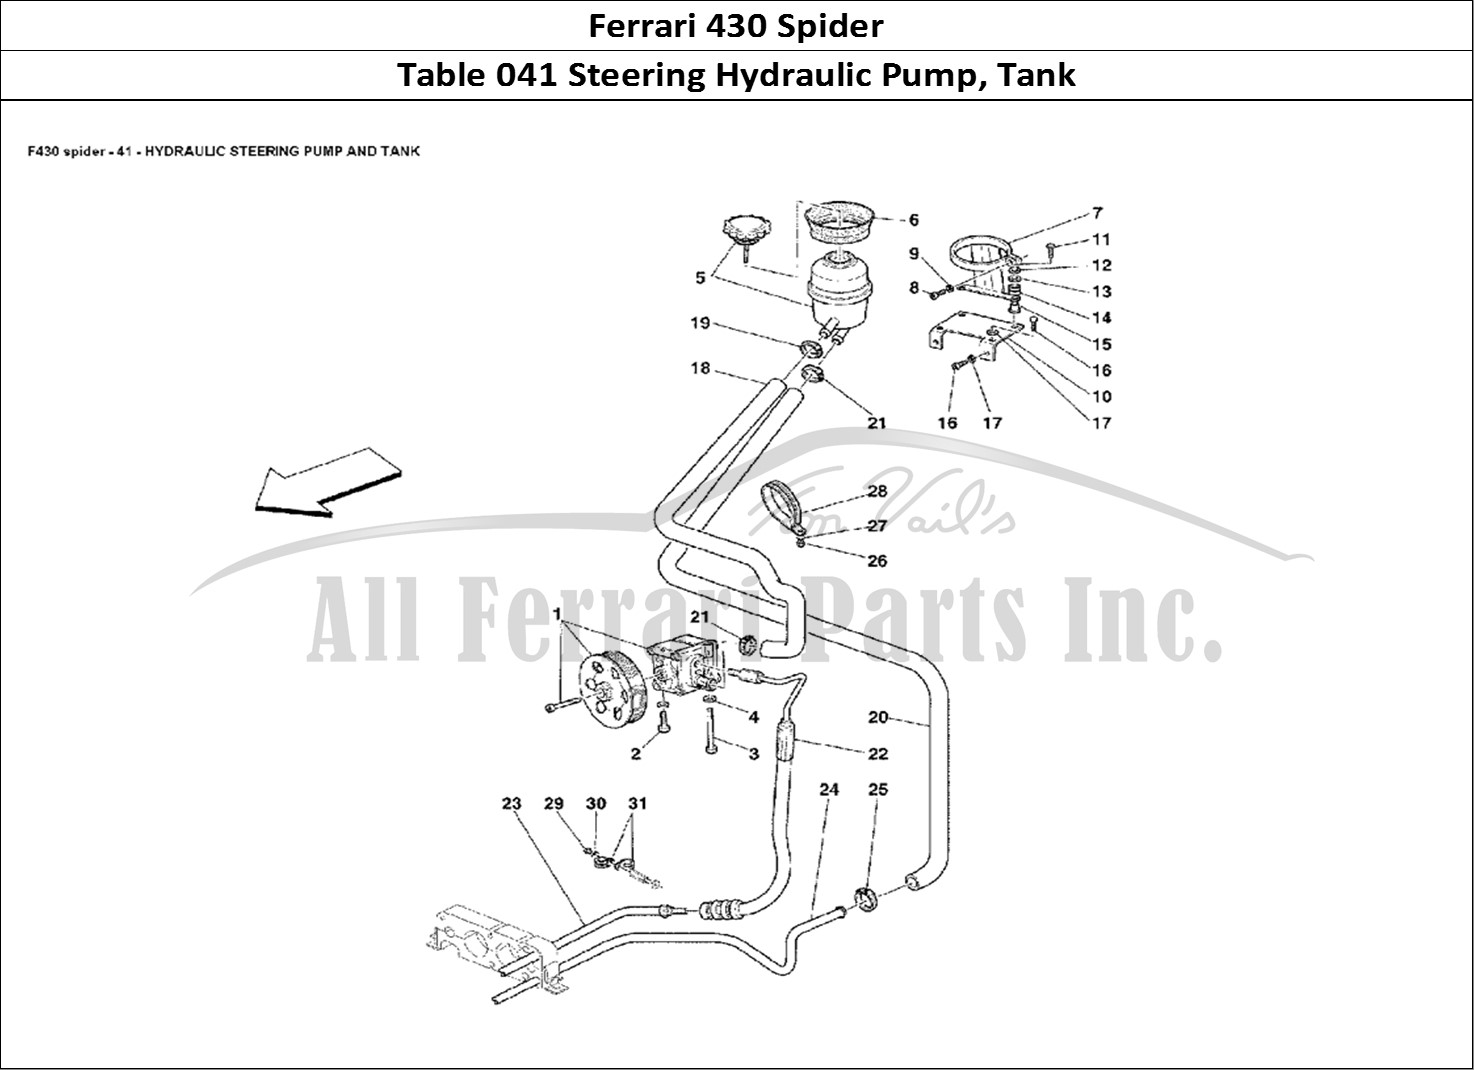 Ferrari Parts Ferrari 430 Spider Page 041 Hydraulic Steering Pump a